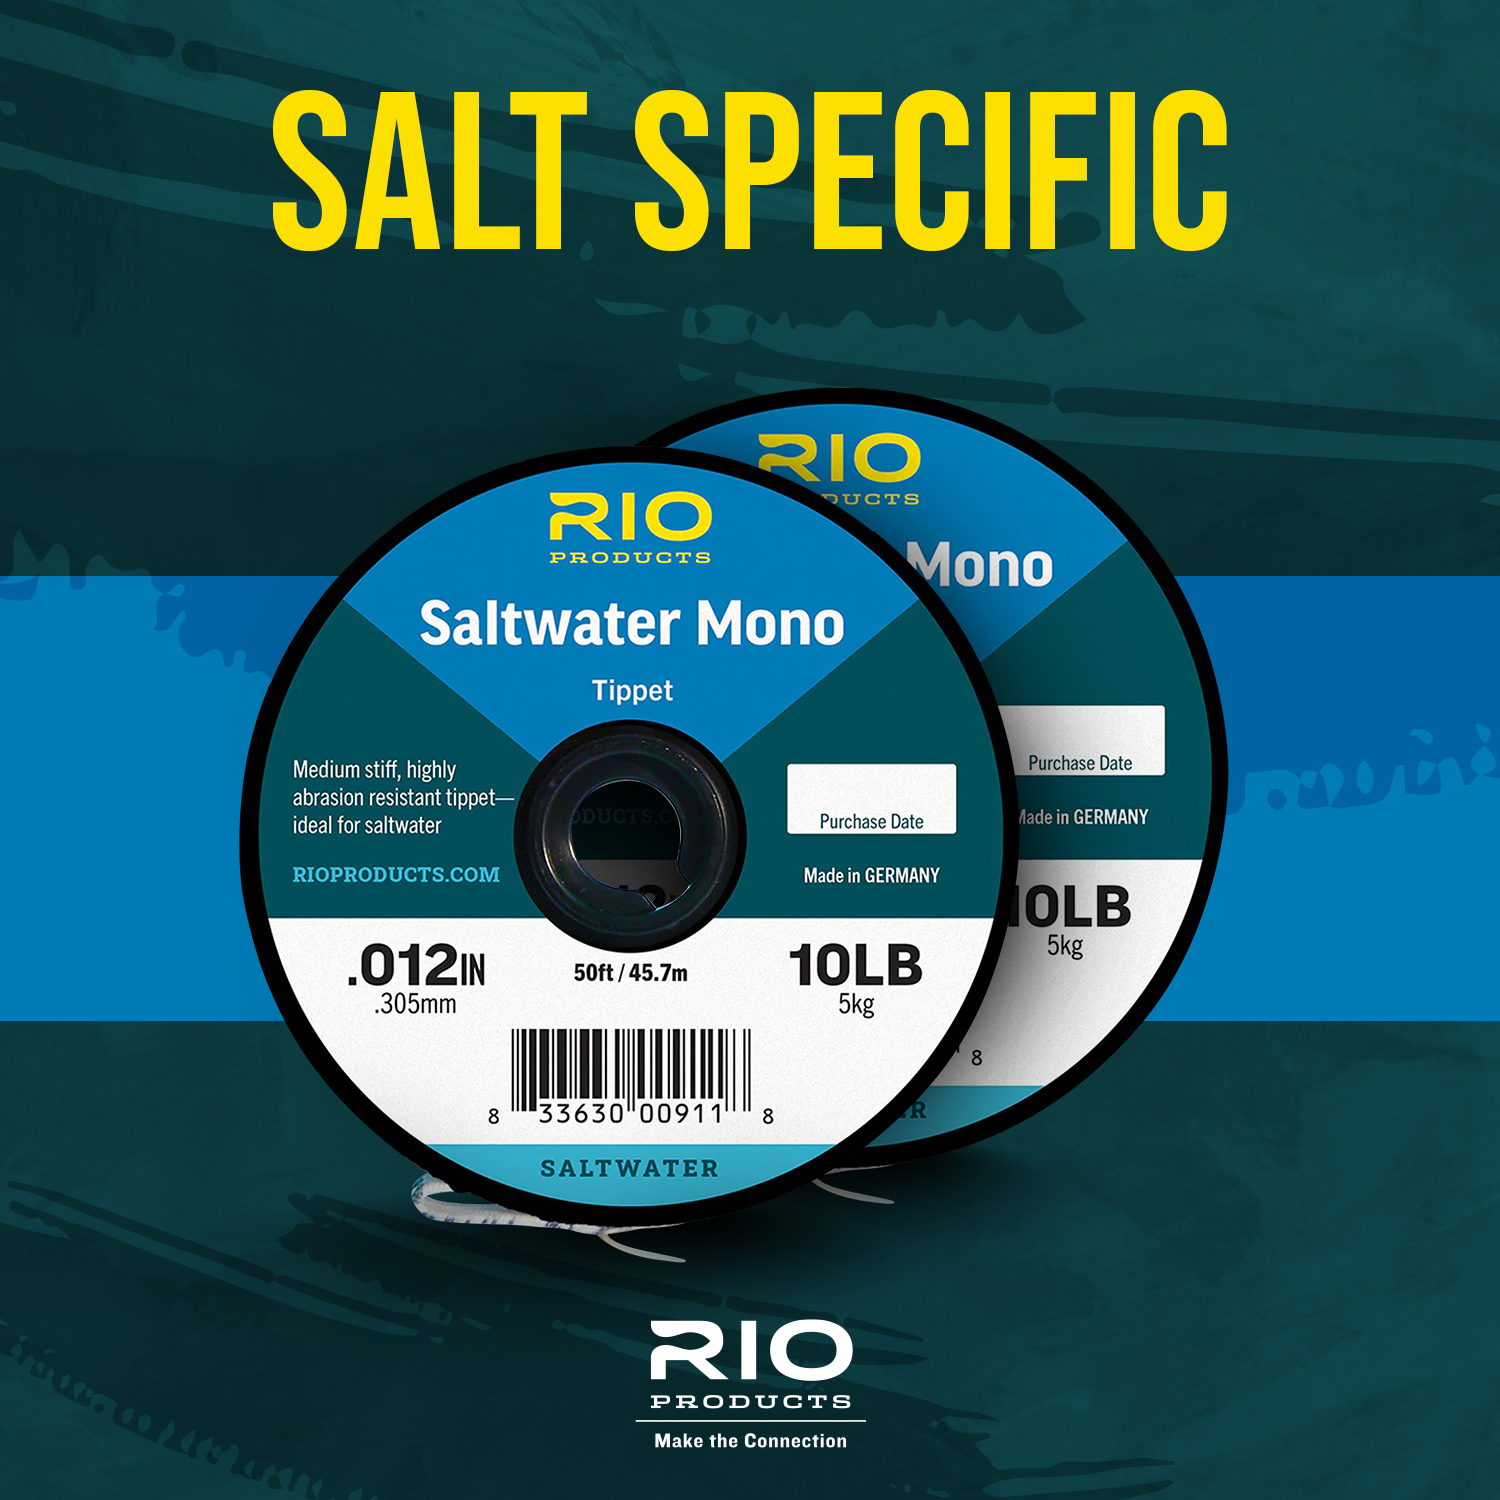 RIO Saltwater Mono Tippet – Guide Flyfishing, Fly Fishing Rods, Reels, Sage, Redington, RIO